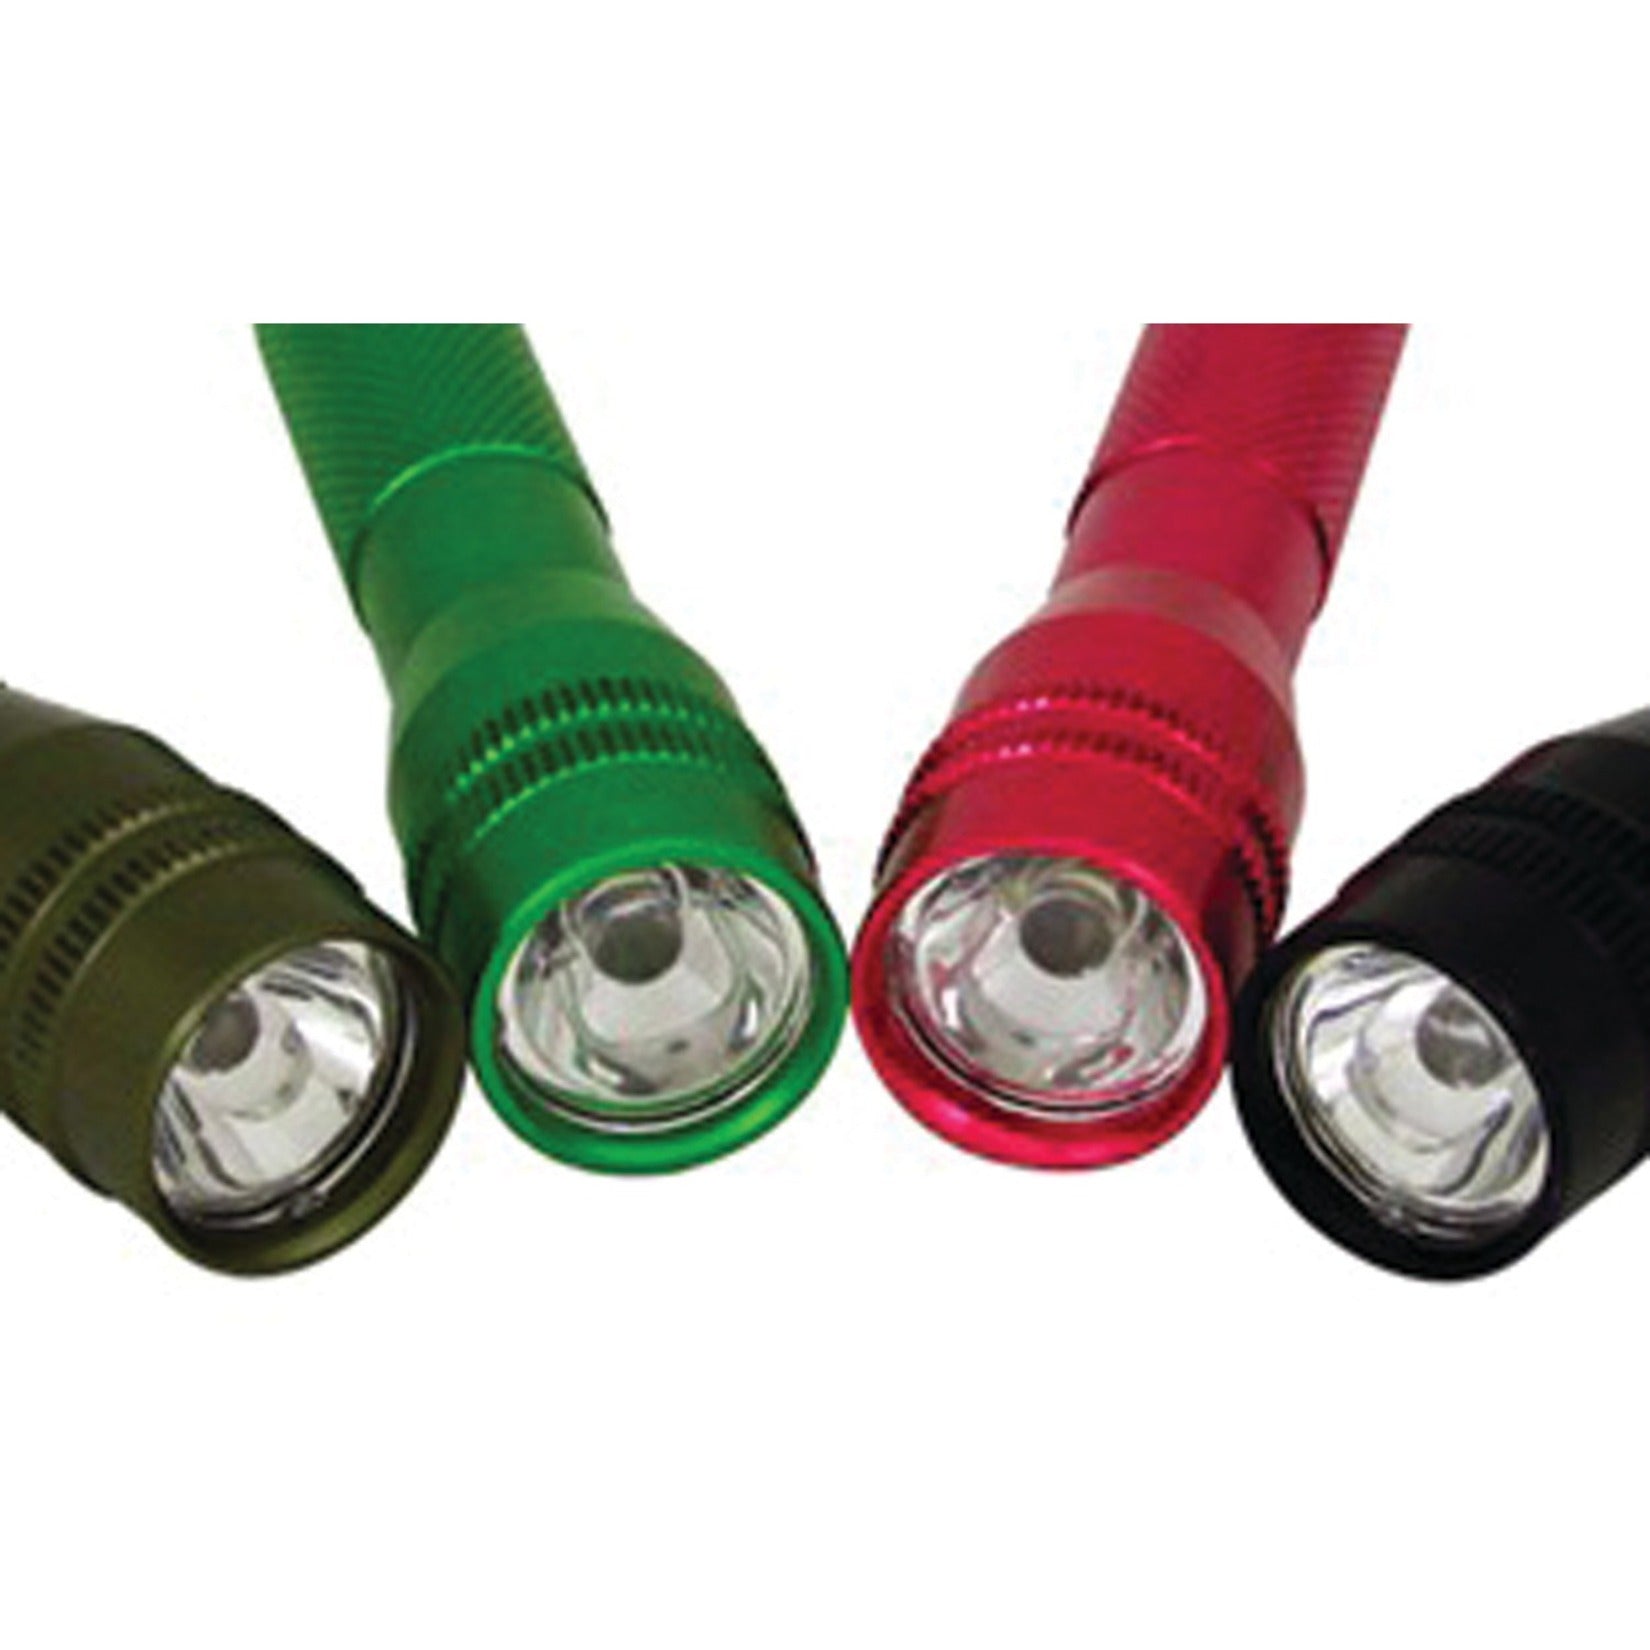 Dorcy 46-4001 Keychain LED Flashlight, Water Resistant, 10 Feet Beam Distance